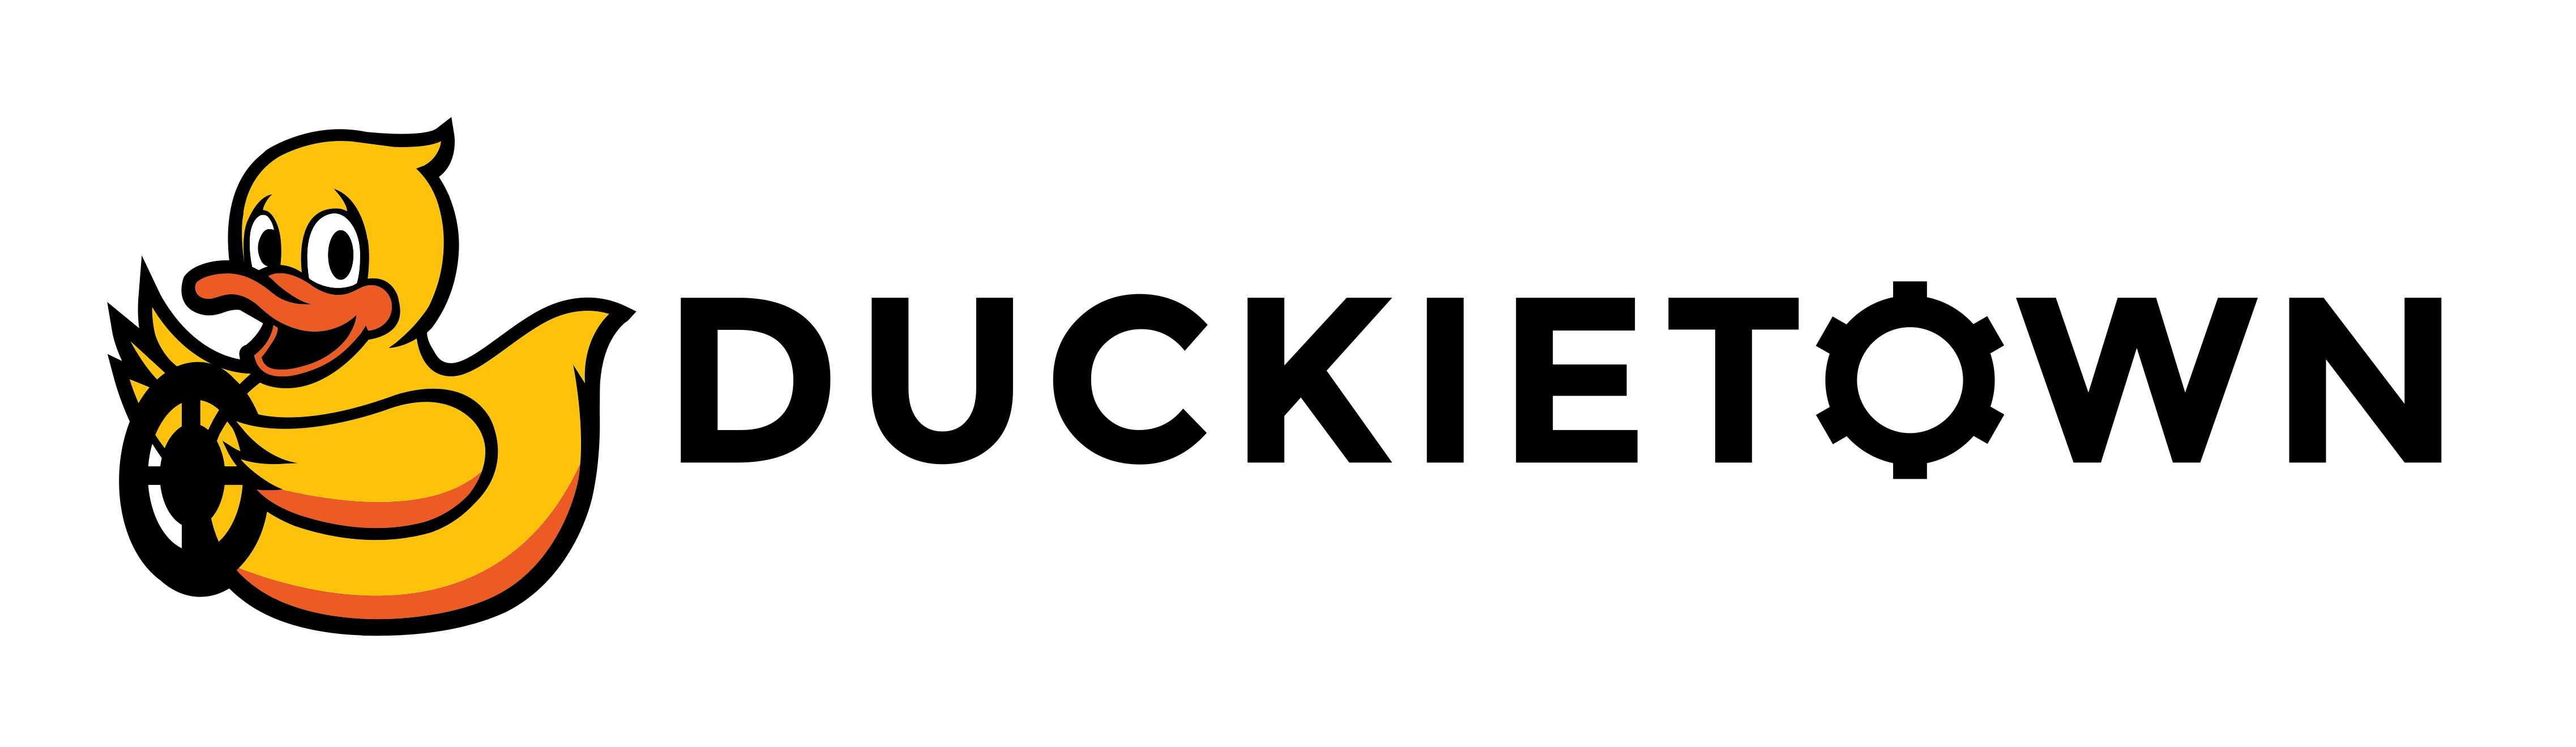 Duckietown Logo